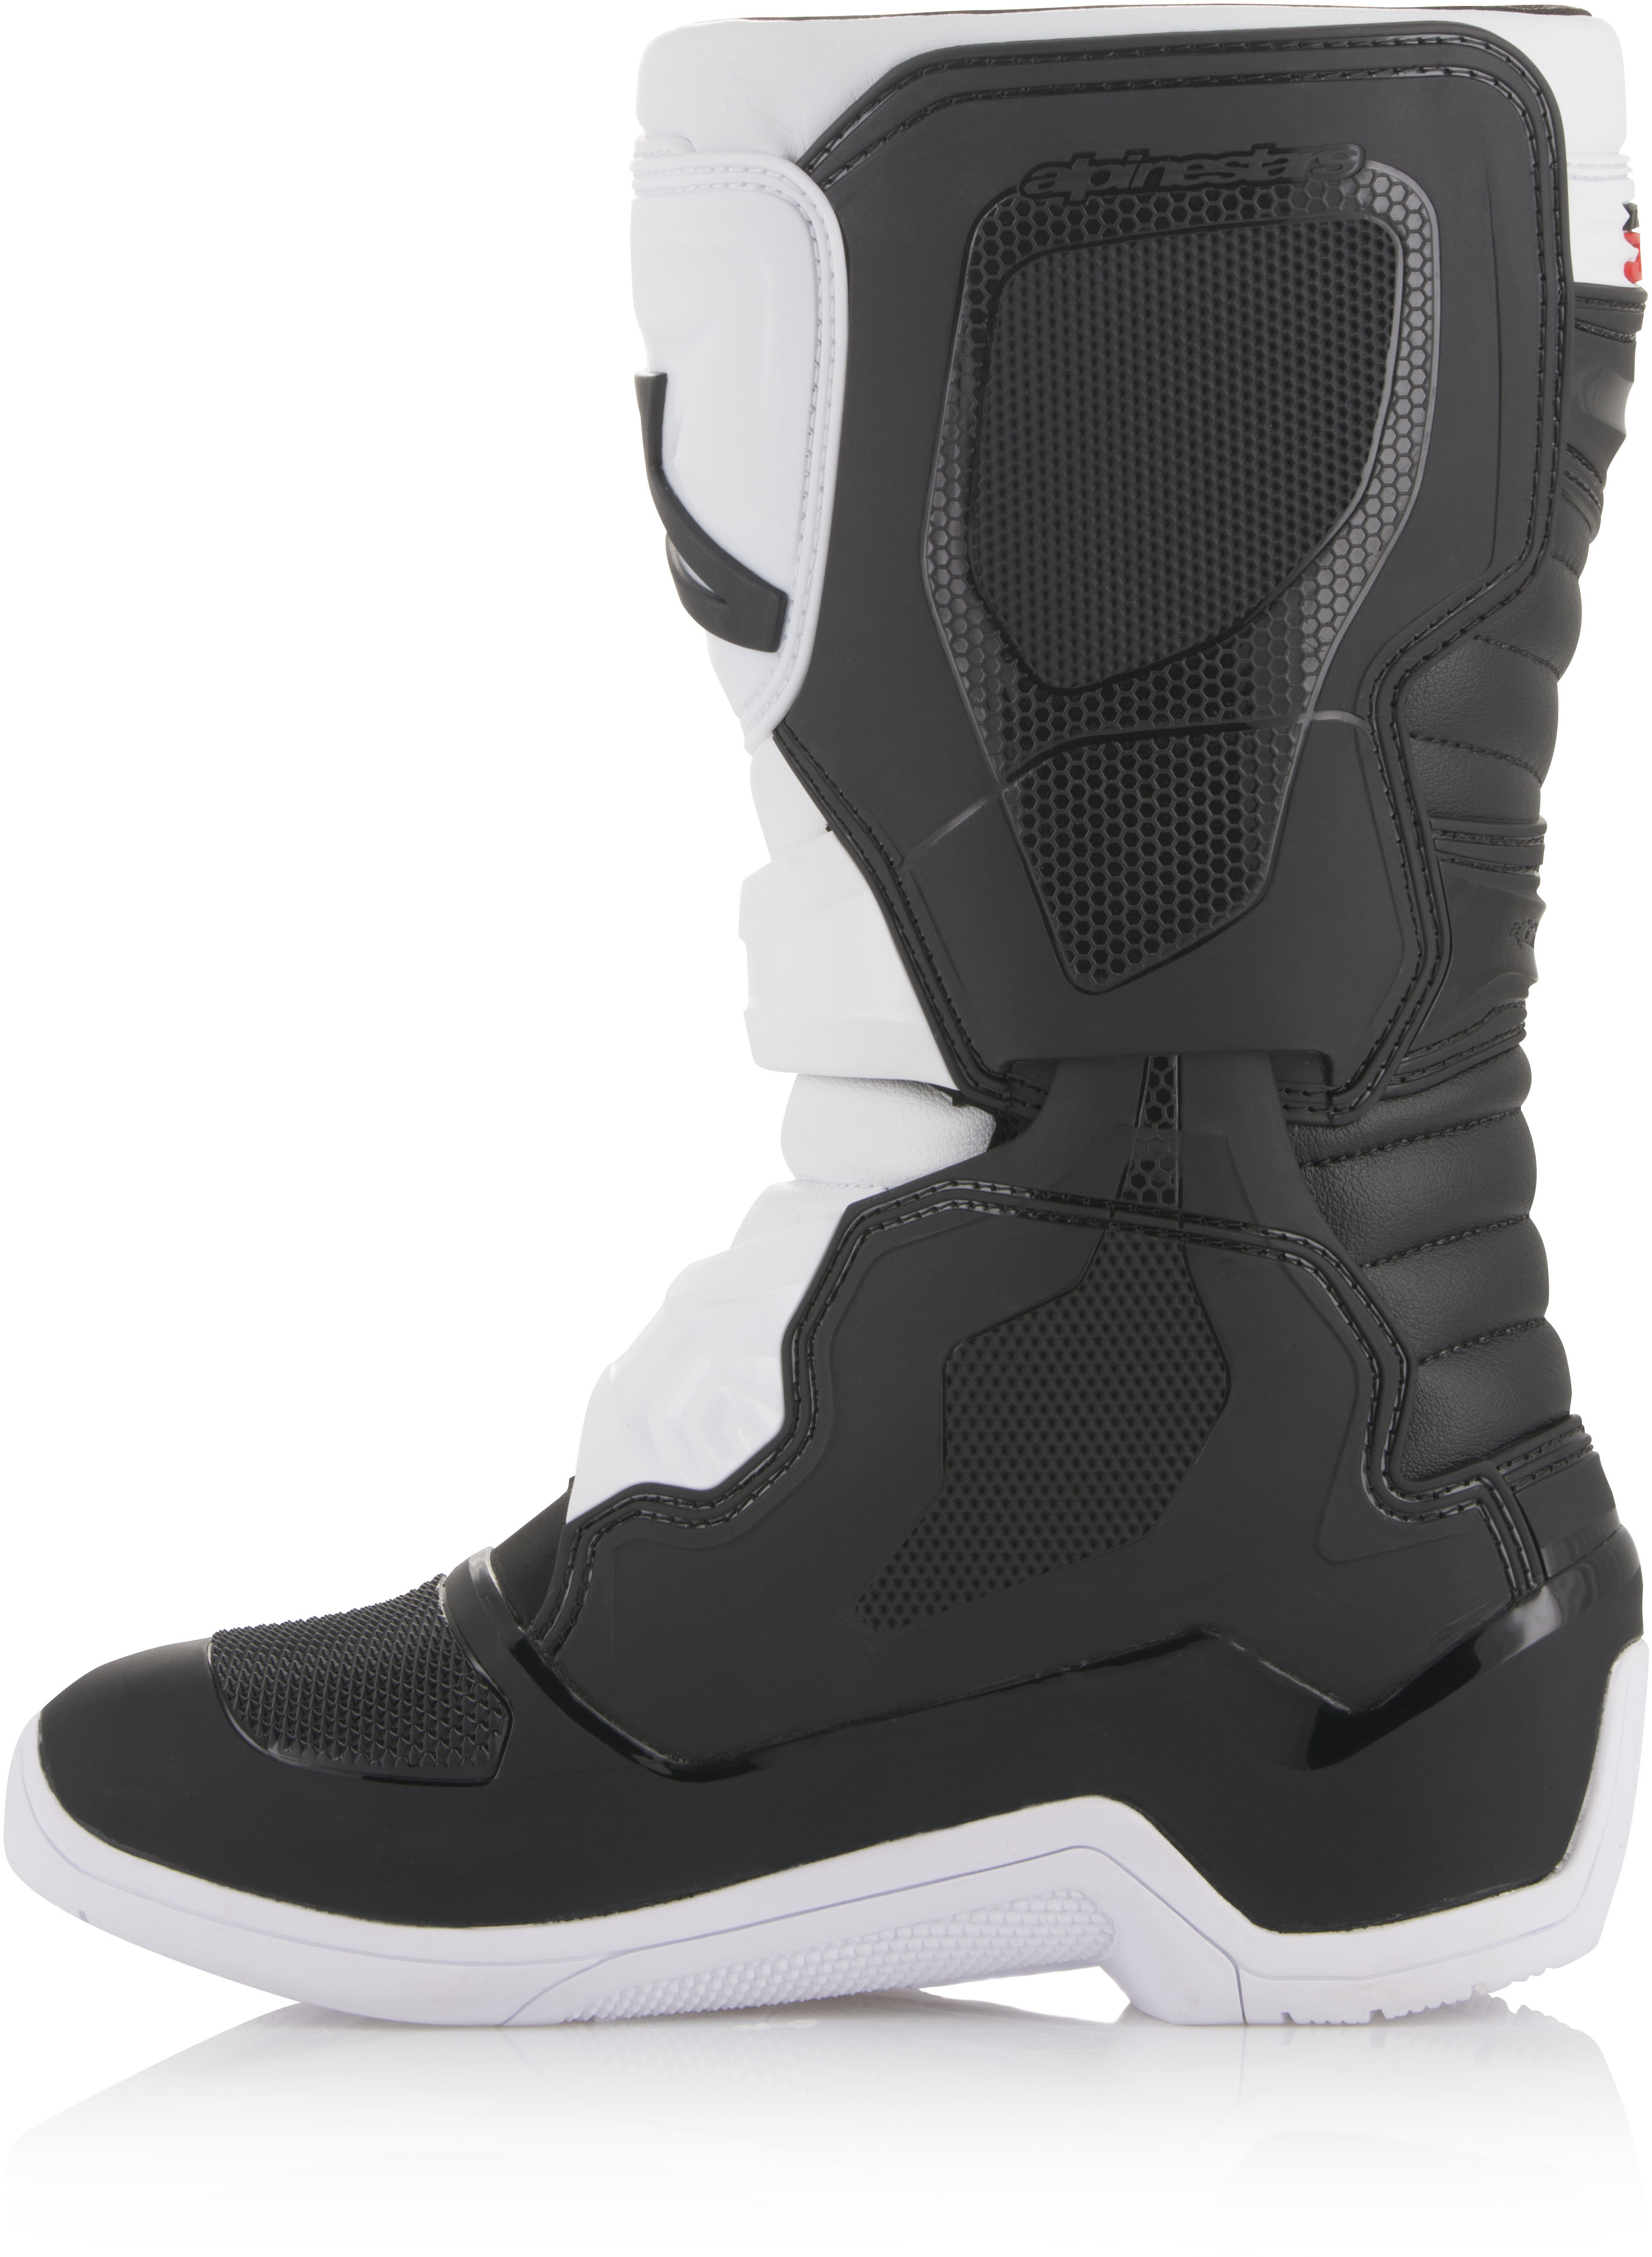 Tech 3S Boots Black/White Size 4 - Click Image to Close